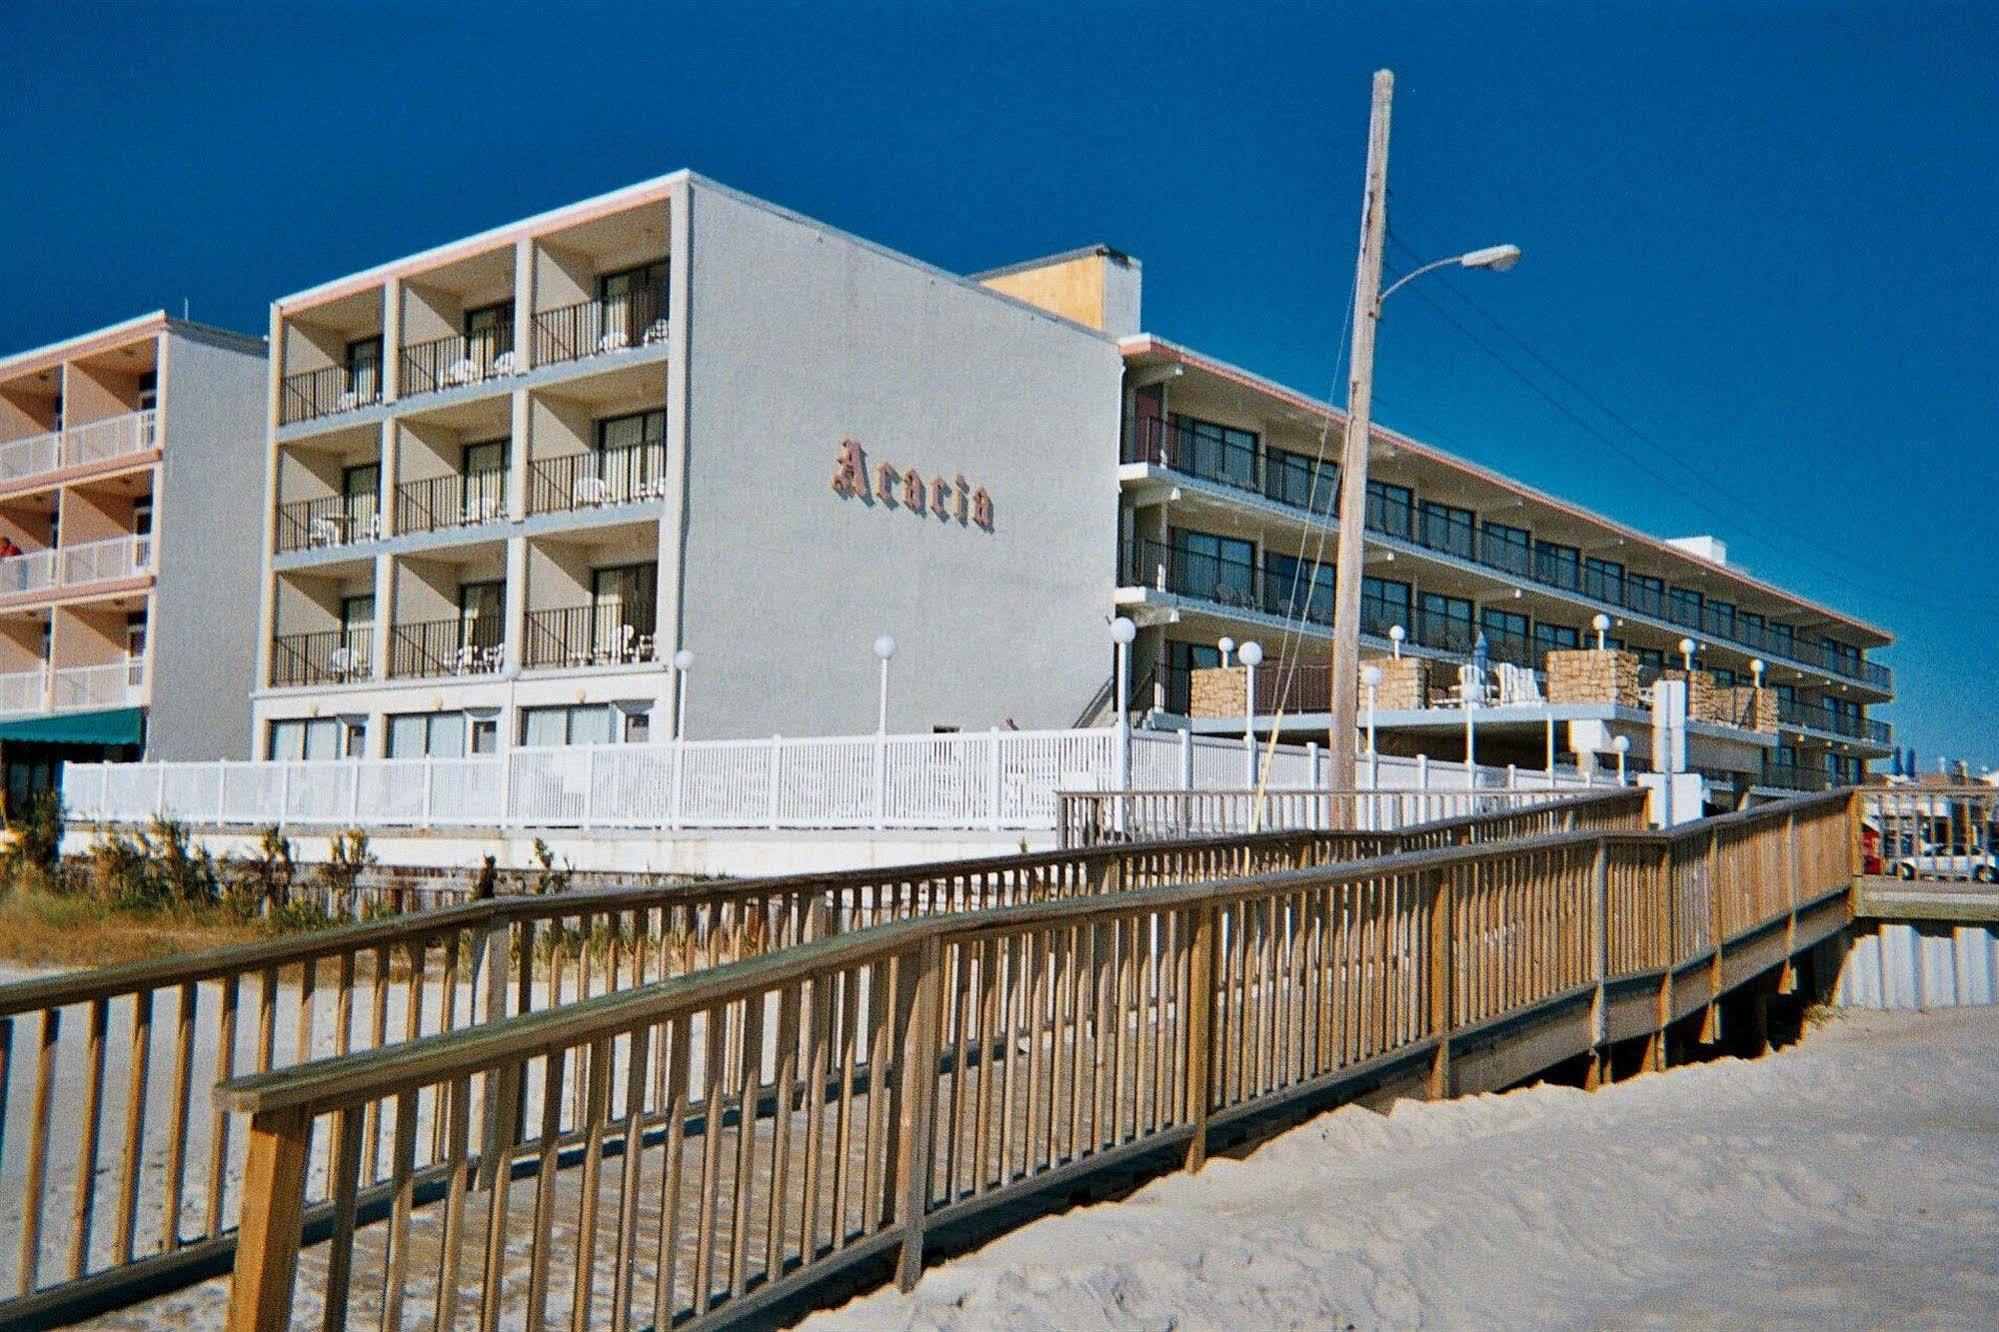 Acacia Beachfront Resort Wildwood Crest Exterior photo